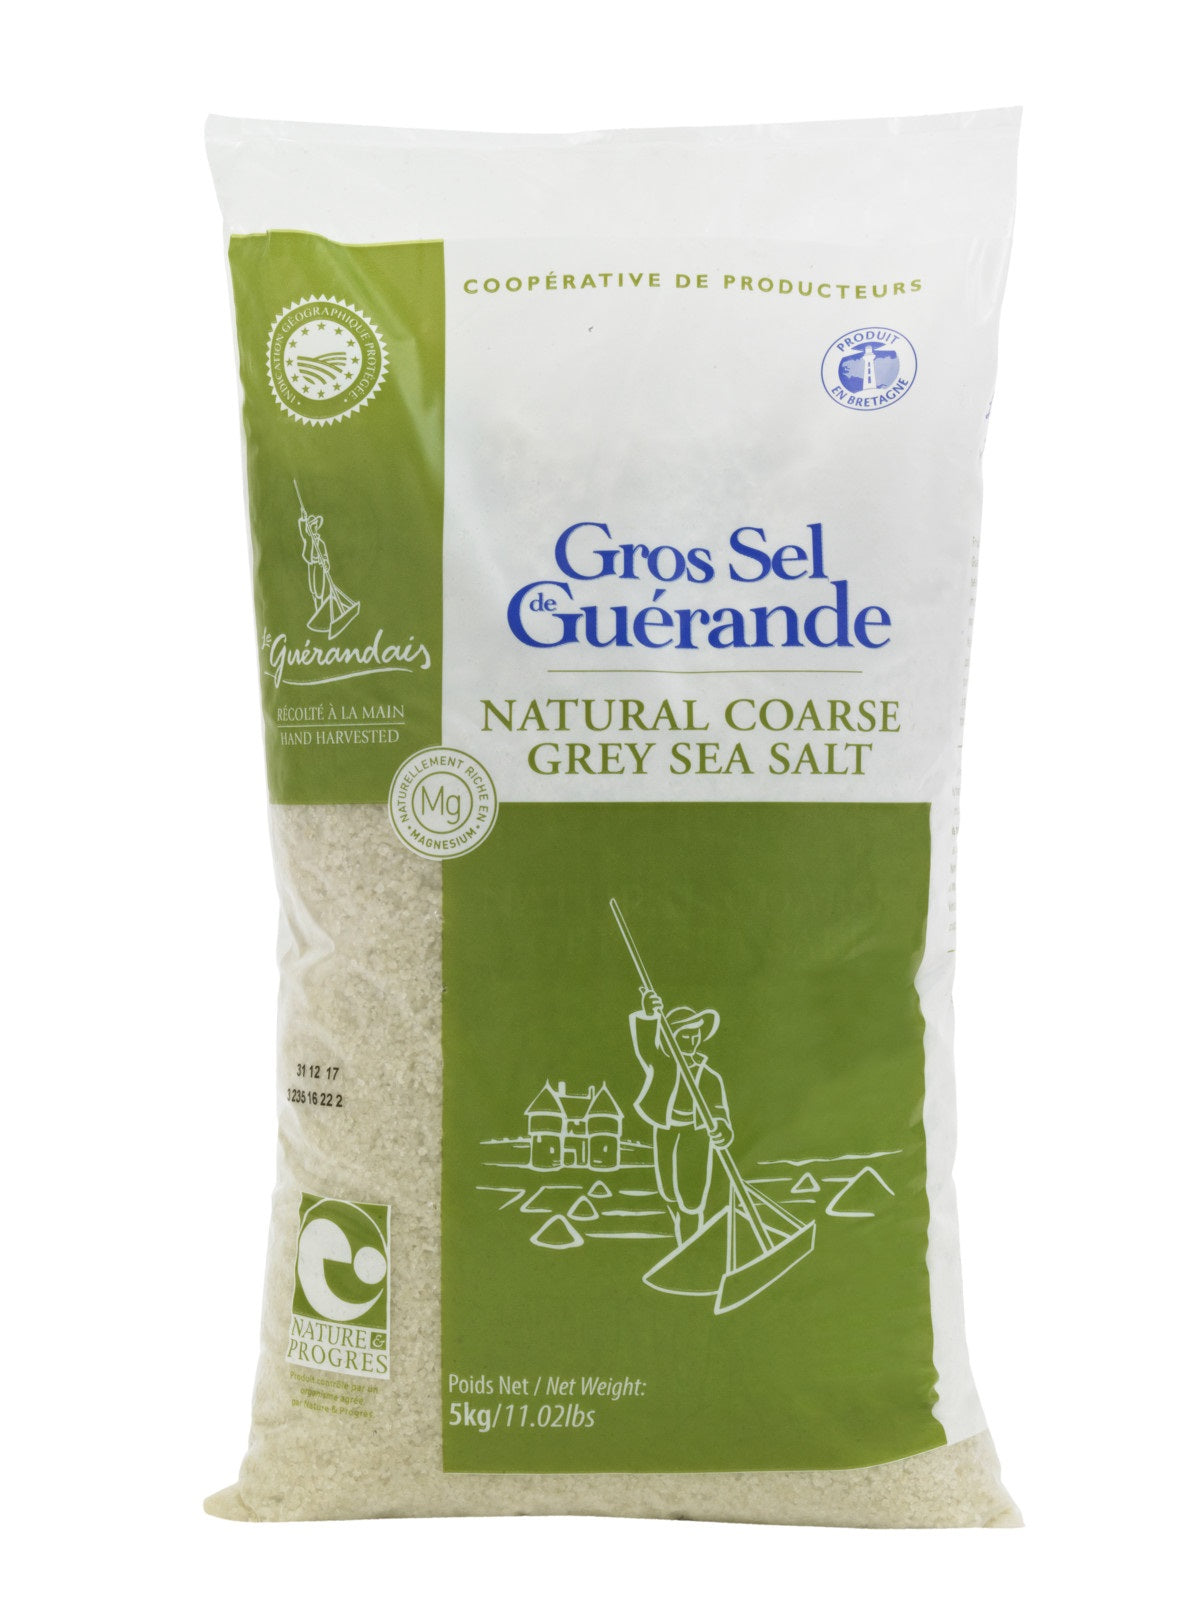 Unrefined Le Guerande Celtic Sea Salt - Grey Coarse 5kg - certified by Nature & Progress